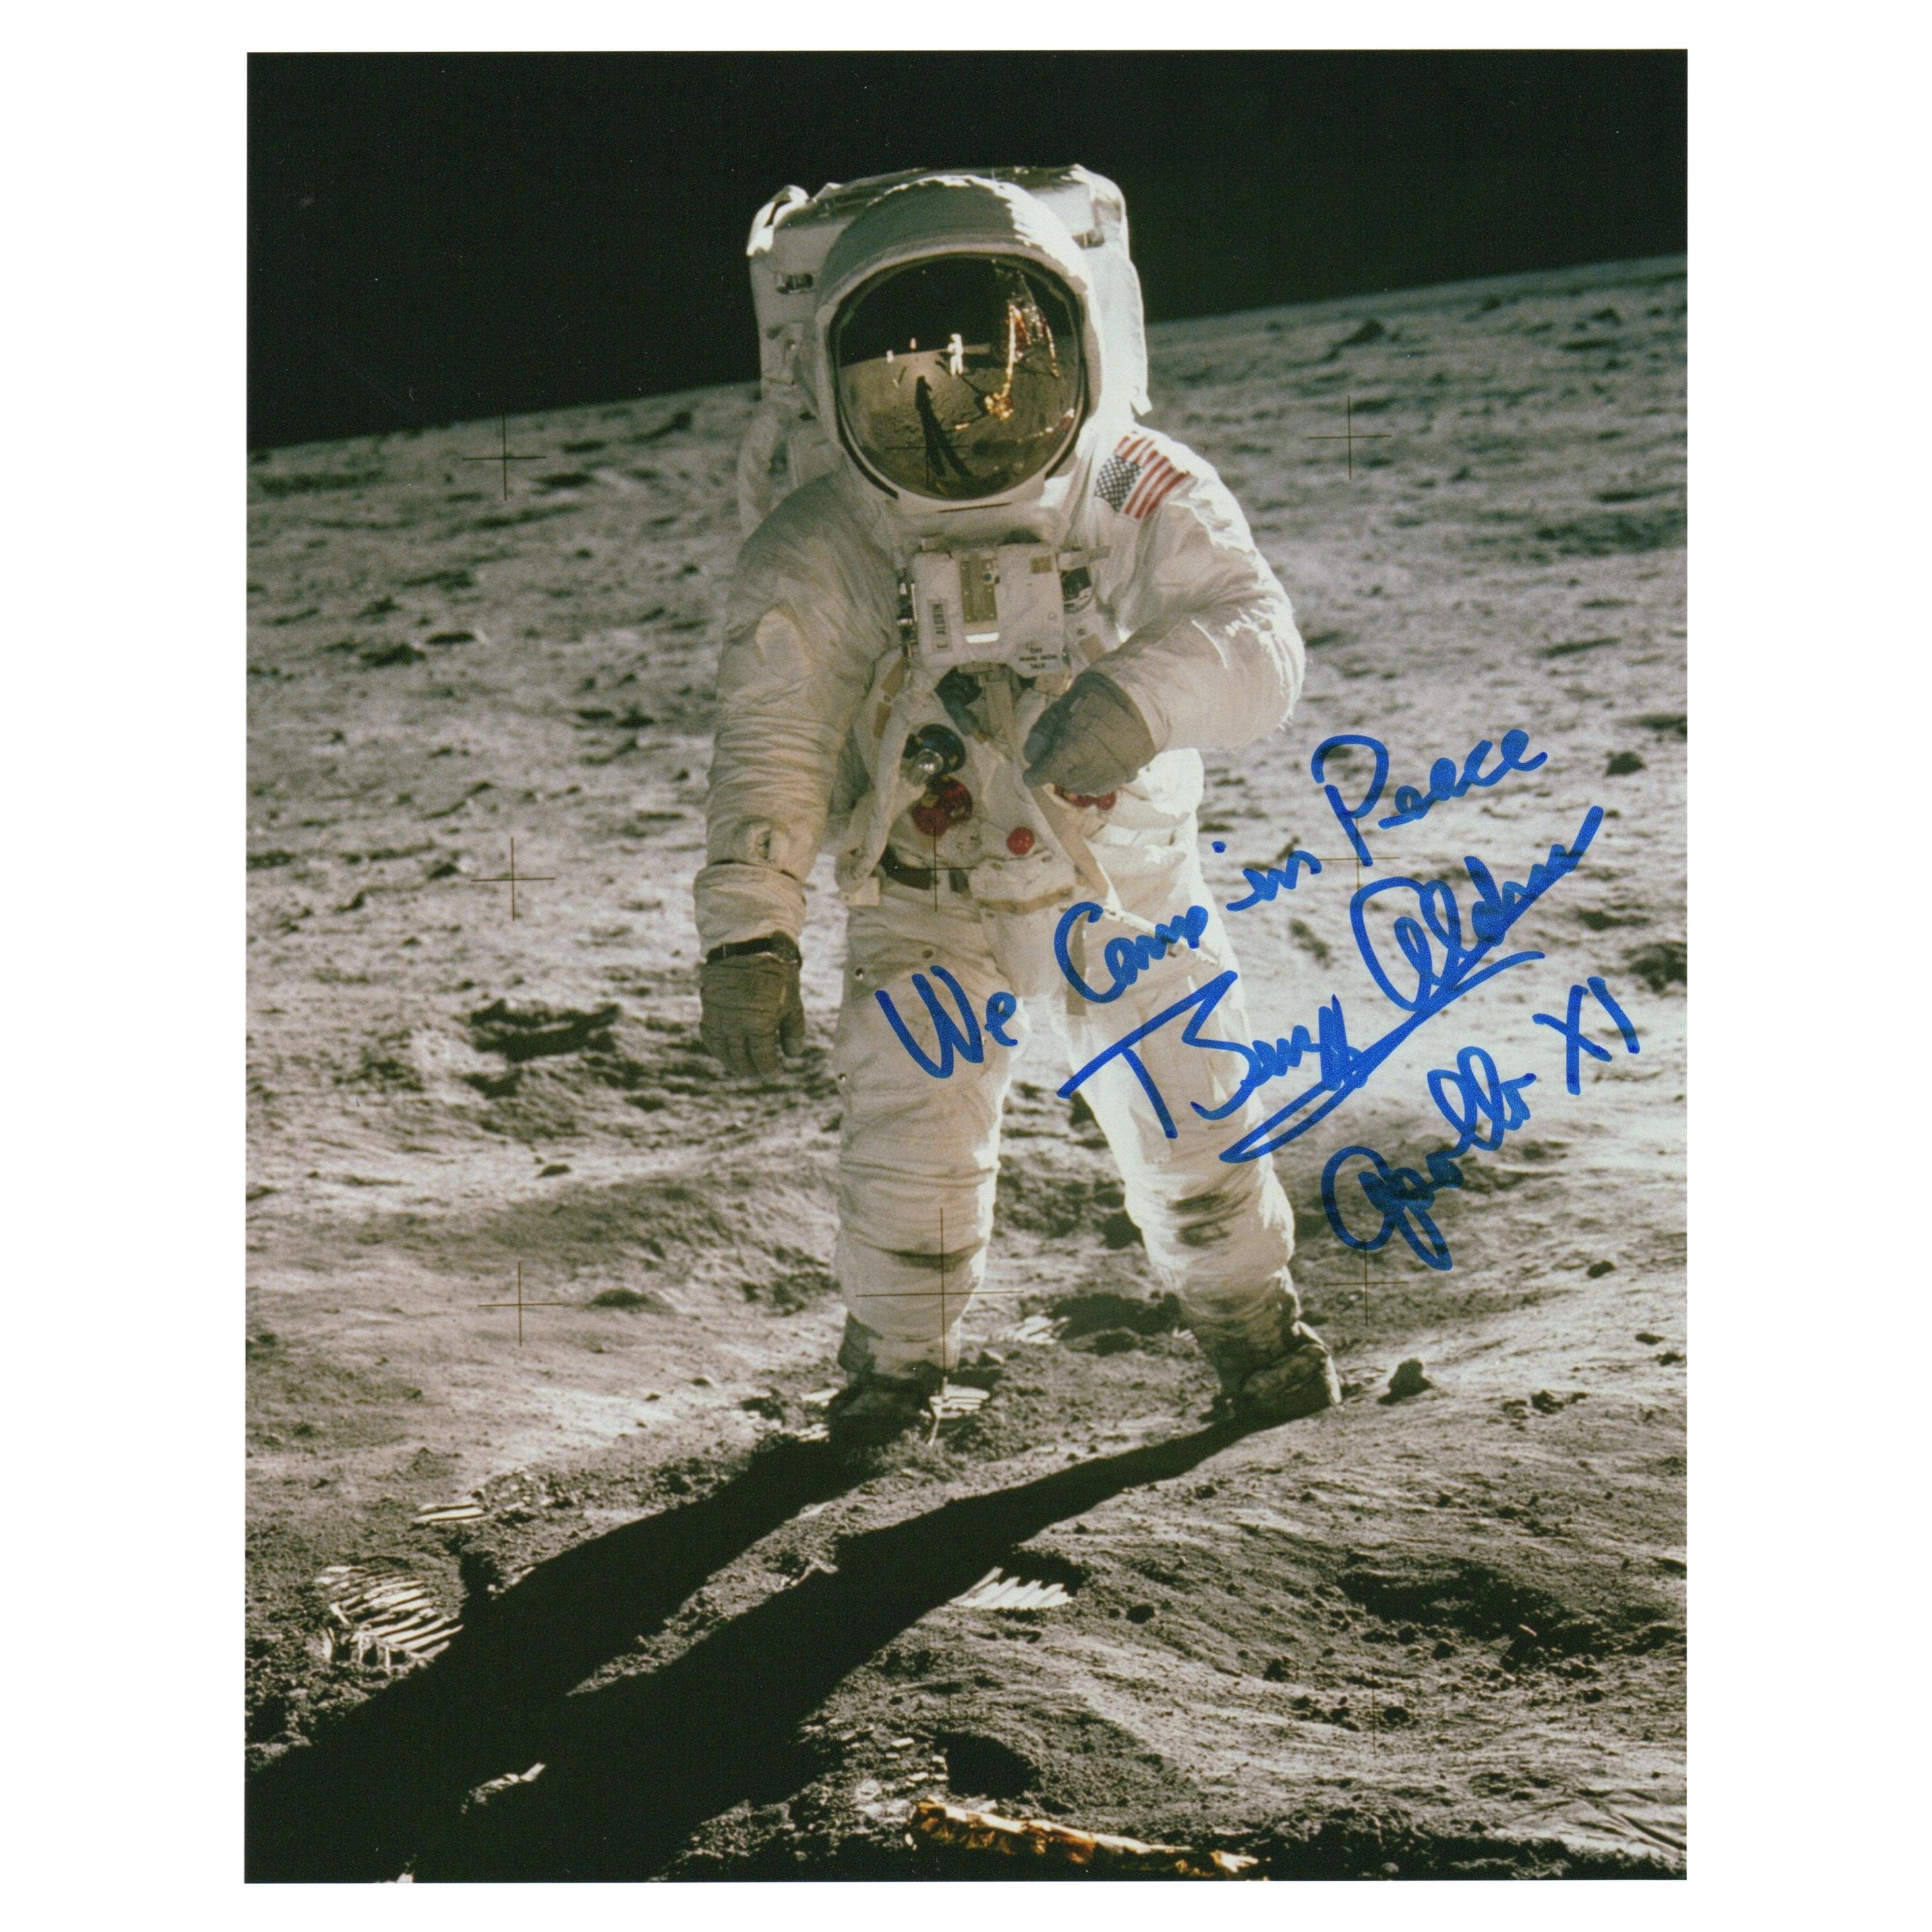 Buzz Aldrin "We Came in Peace" Signed Apollo 11 Photograph